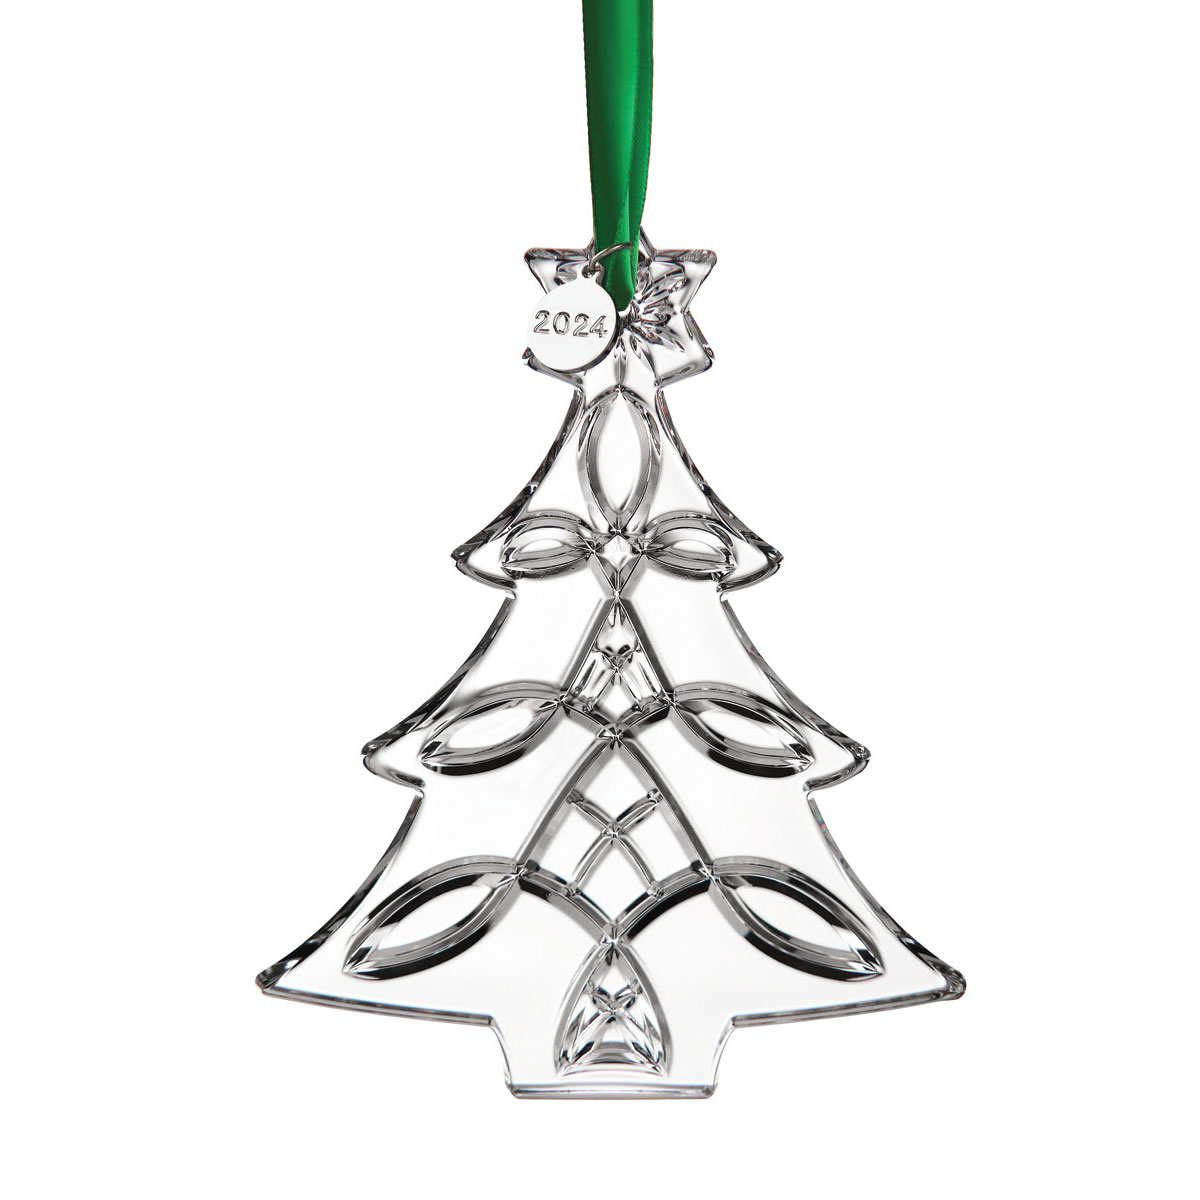 Cashs Ireland 2024 Celtic Christmas Tree Dated Ornament